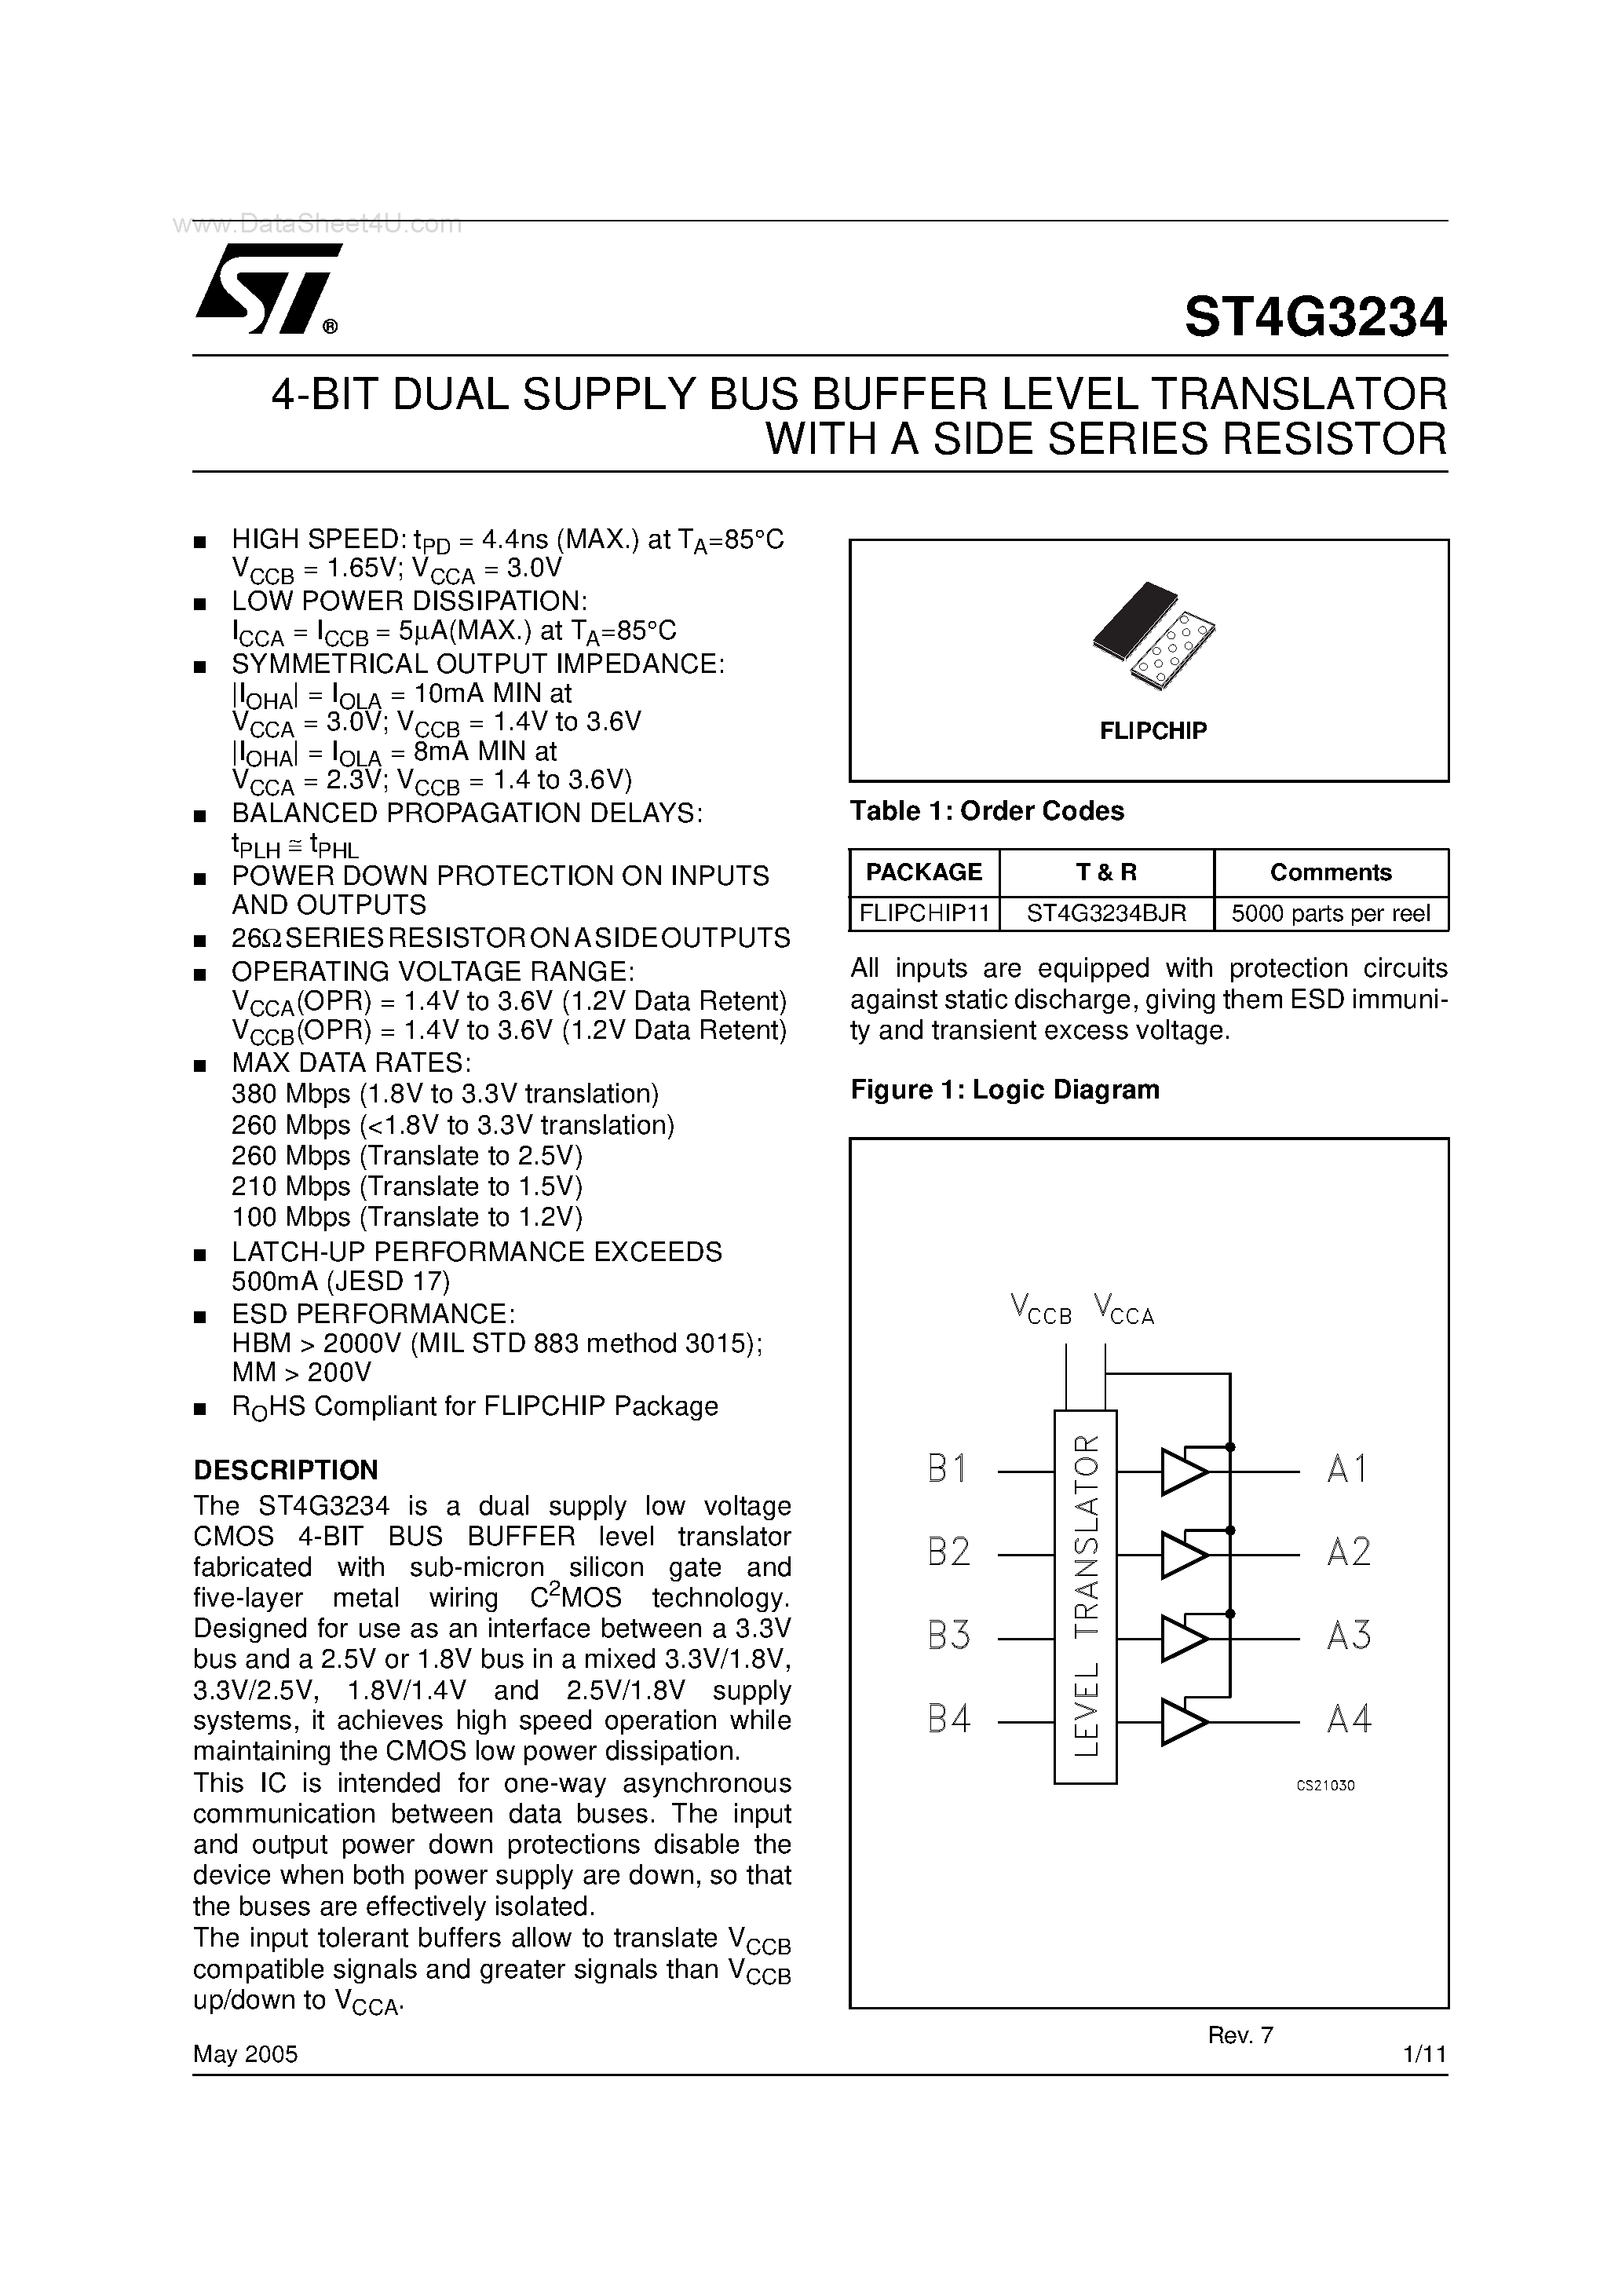 Datasheet ST4G3234 - 4-BIT DUAL SUPPLY BUS BUFFER LEVEL TRANSLATOR page 1